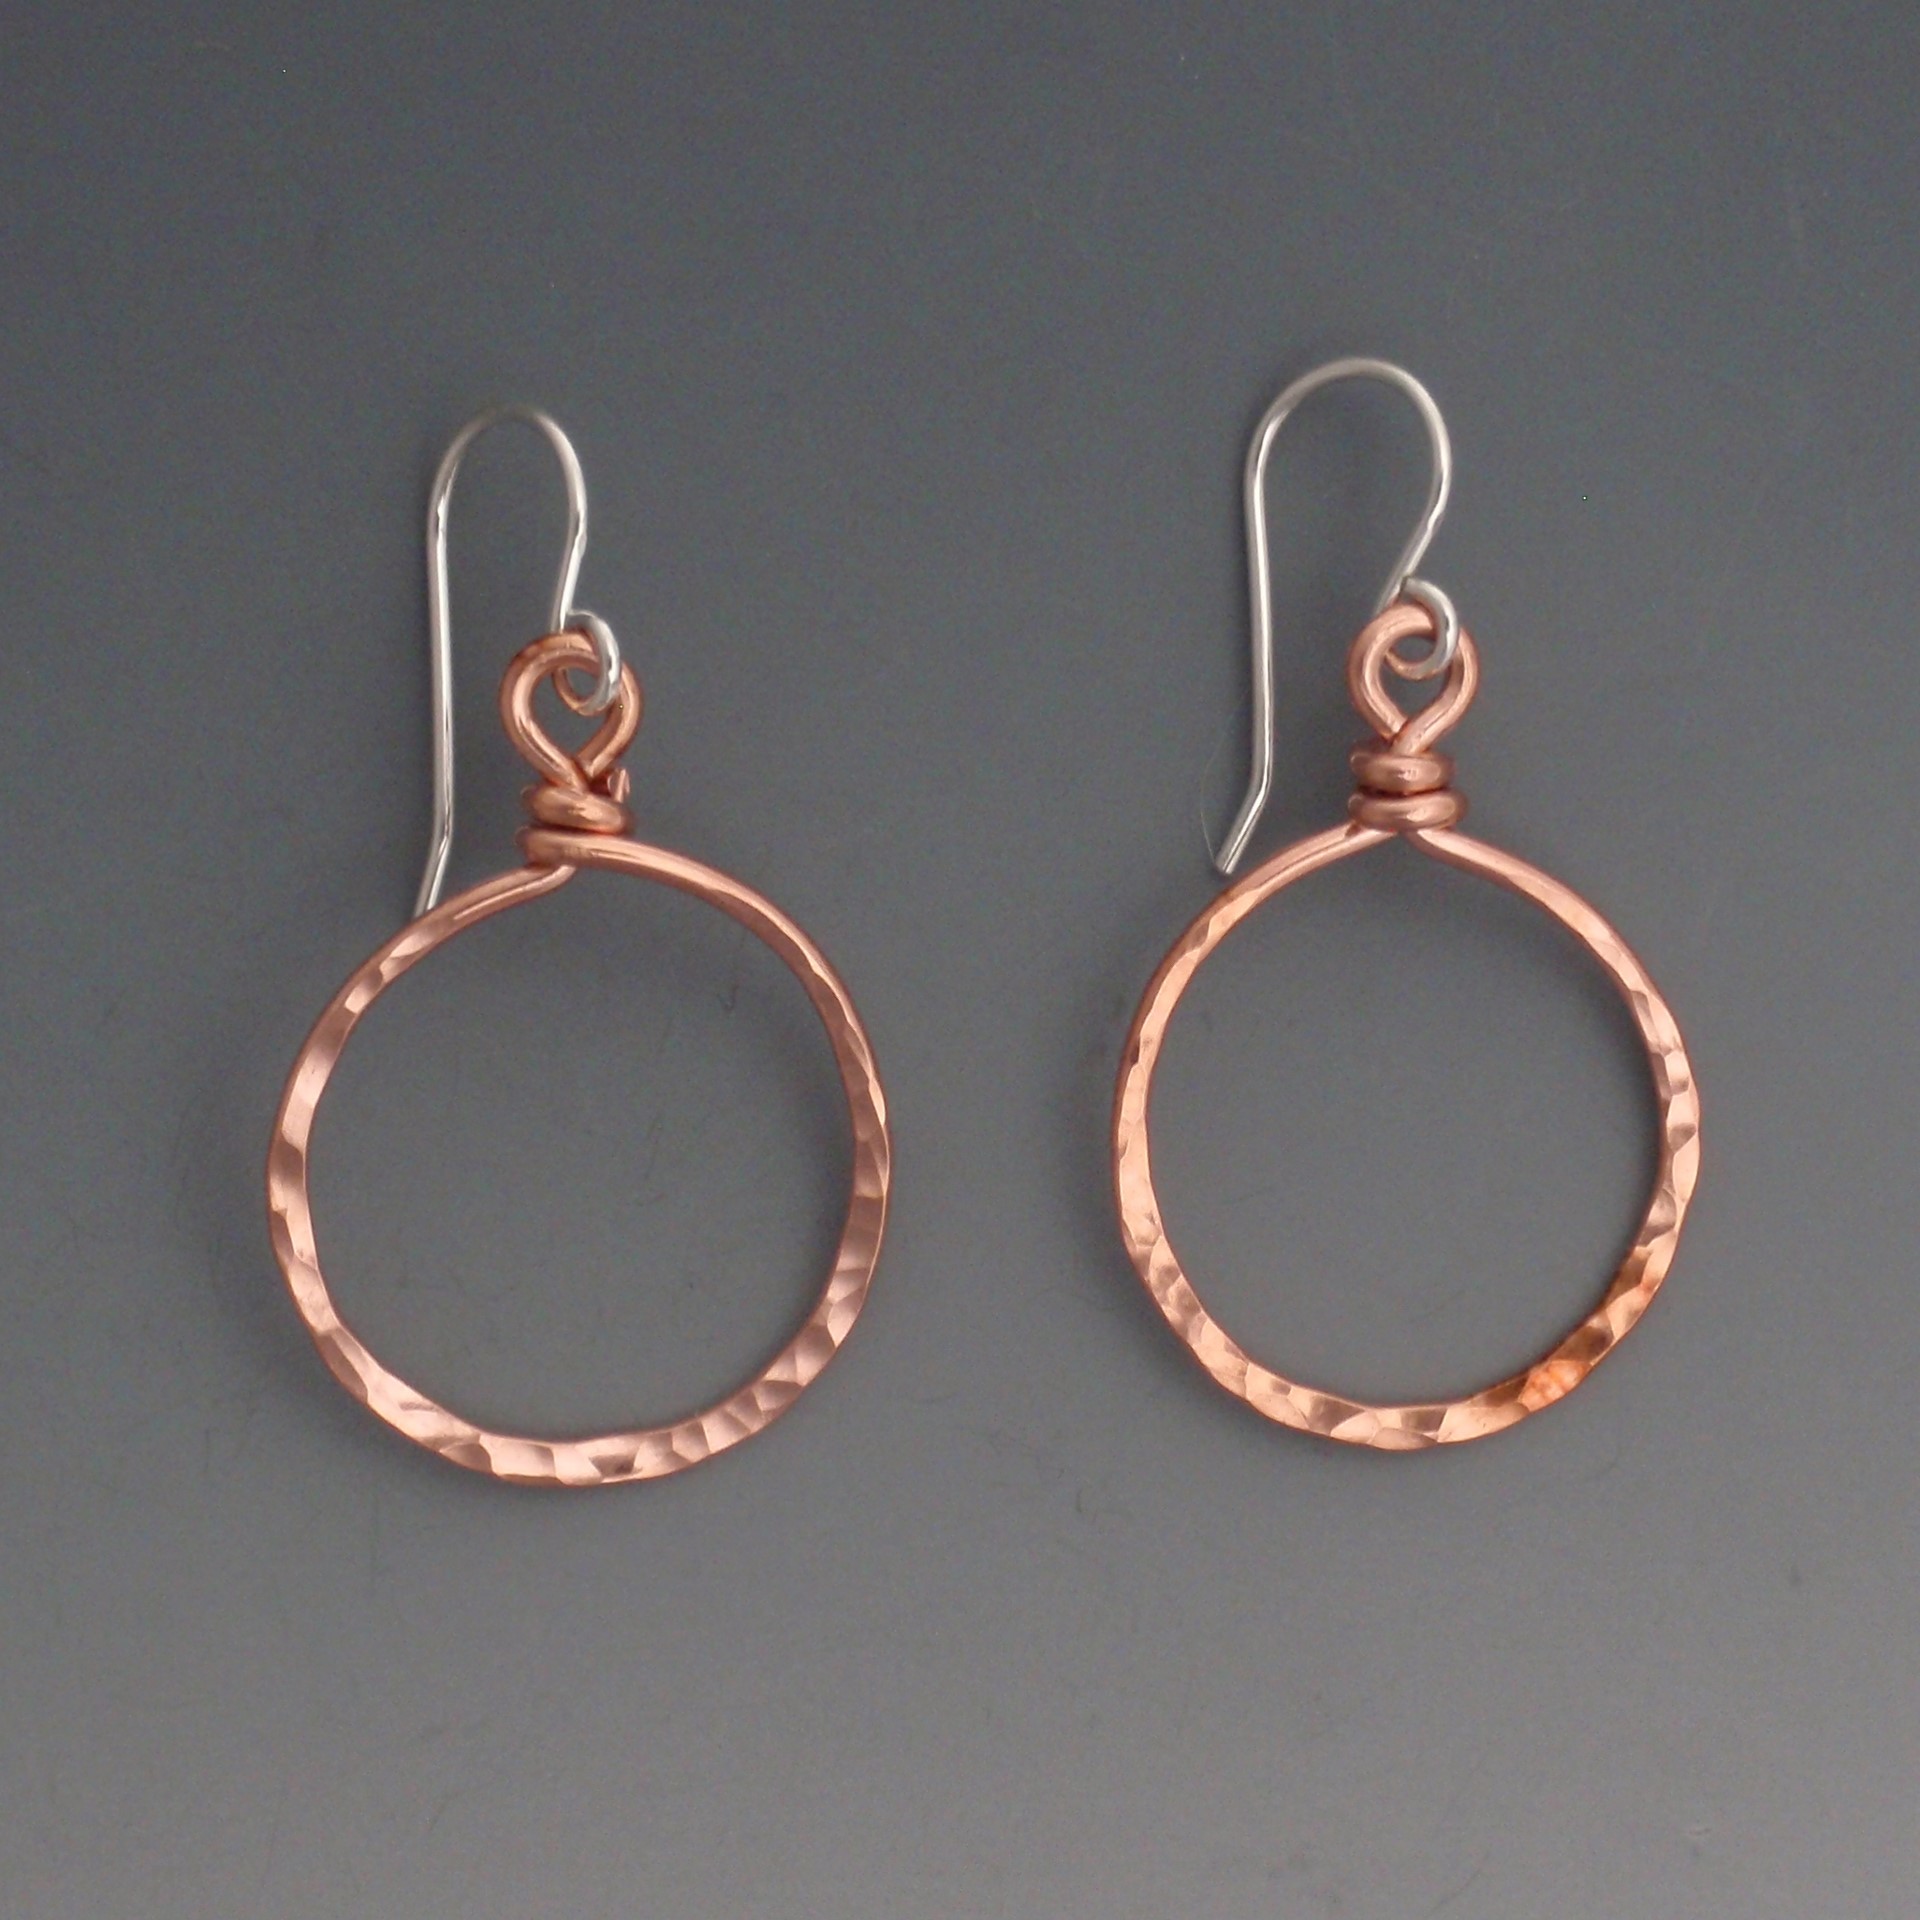 Textured Hoop Earrings in Silver, Copper, or Gold